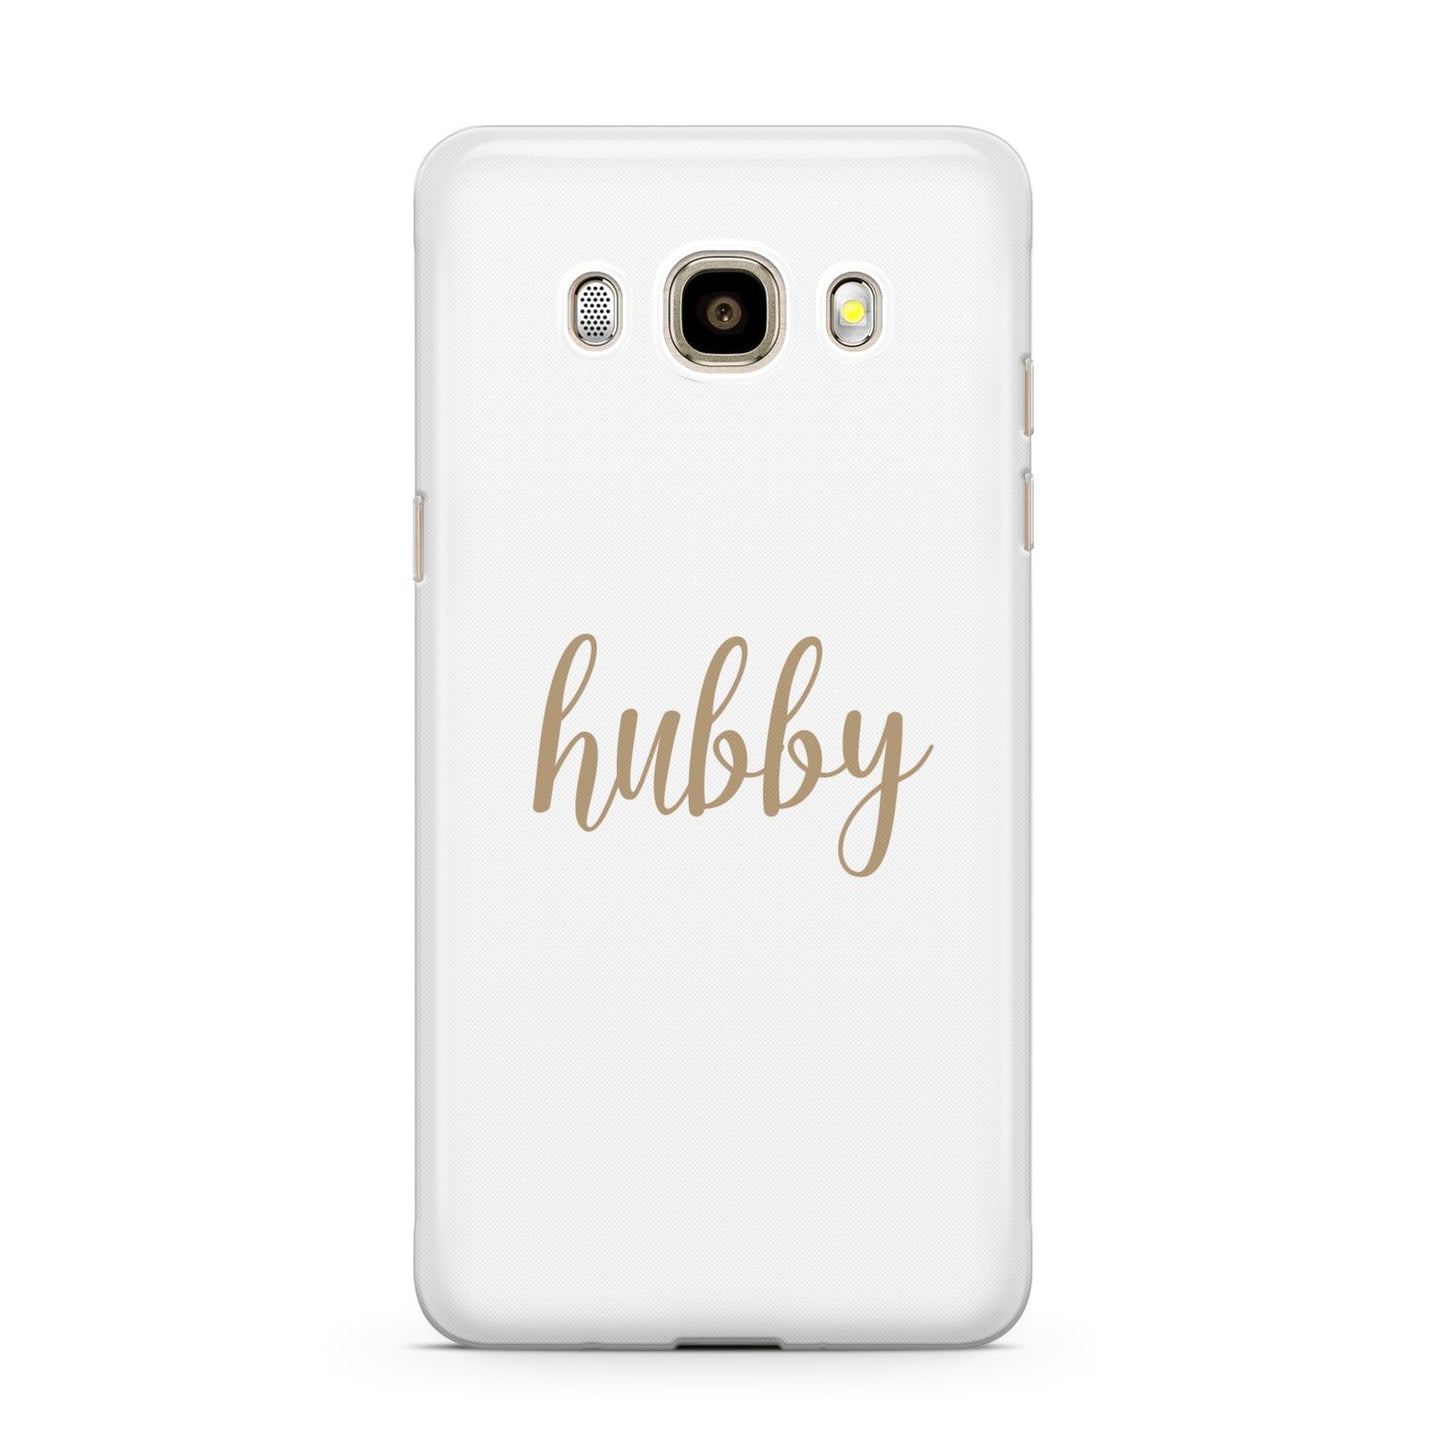 Hubby Samsung Galaxy J7 2016 Case on gold phone